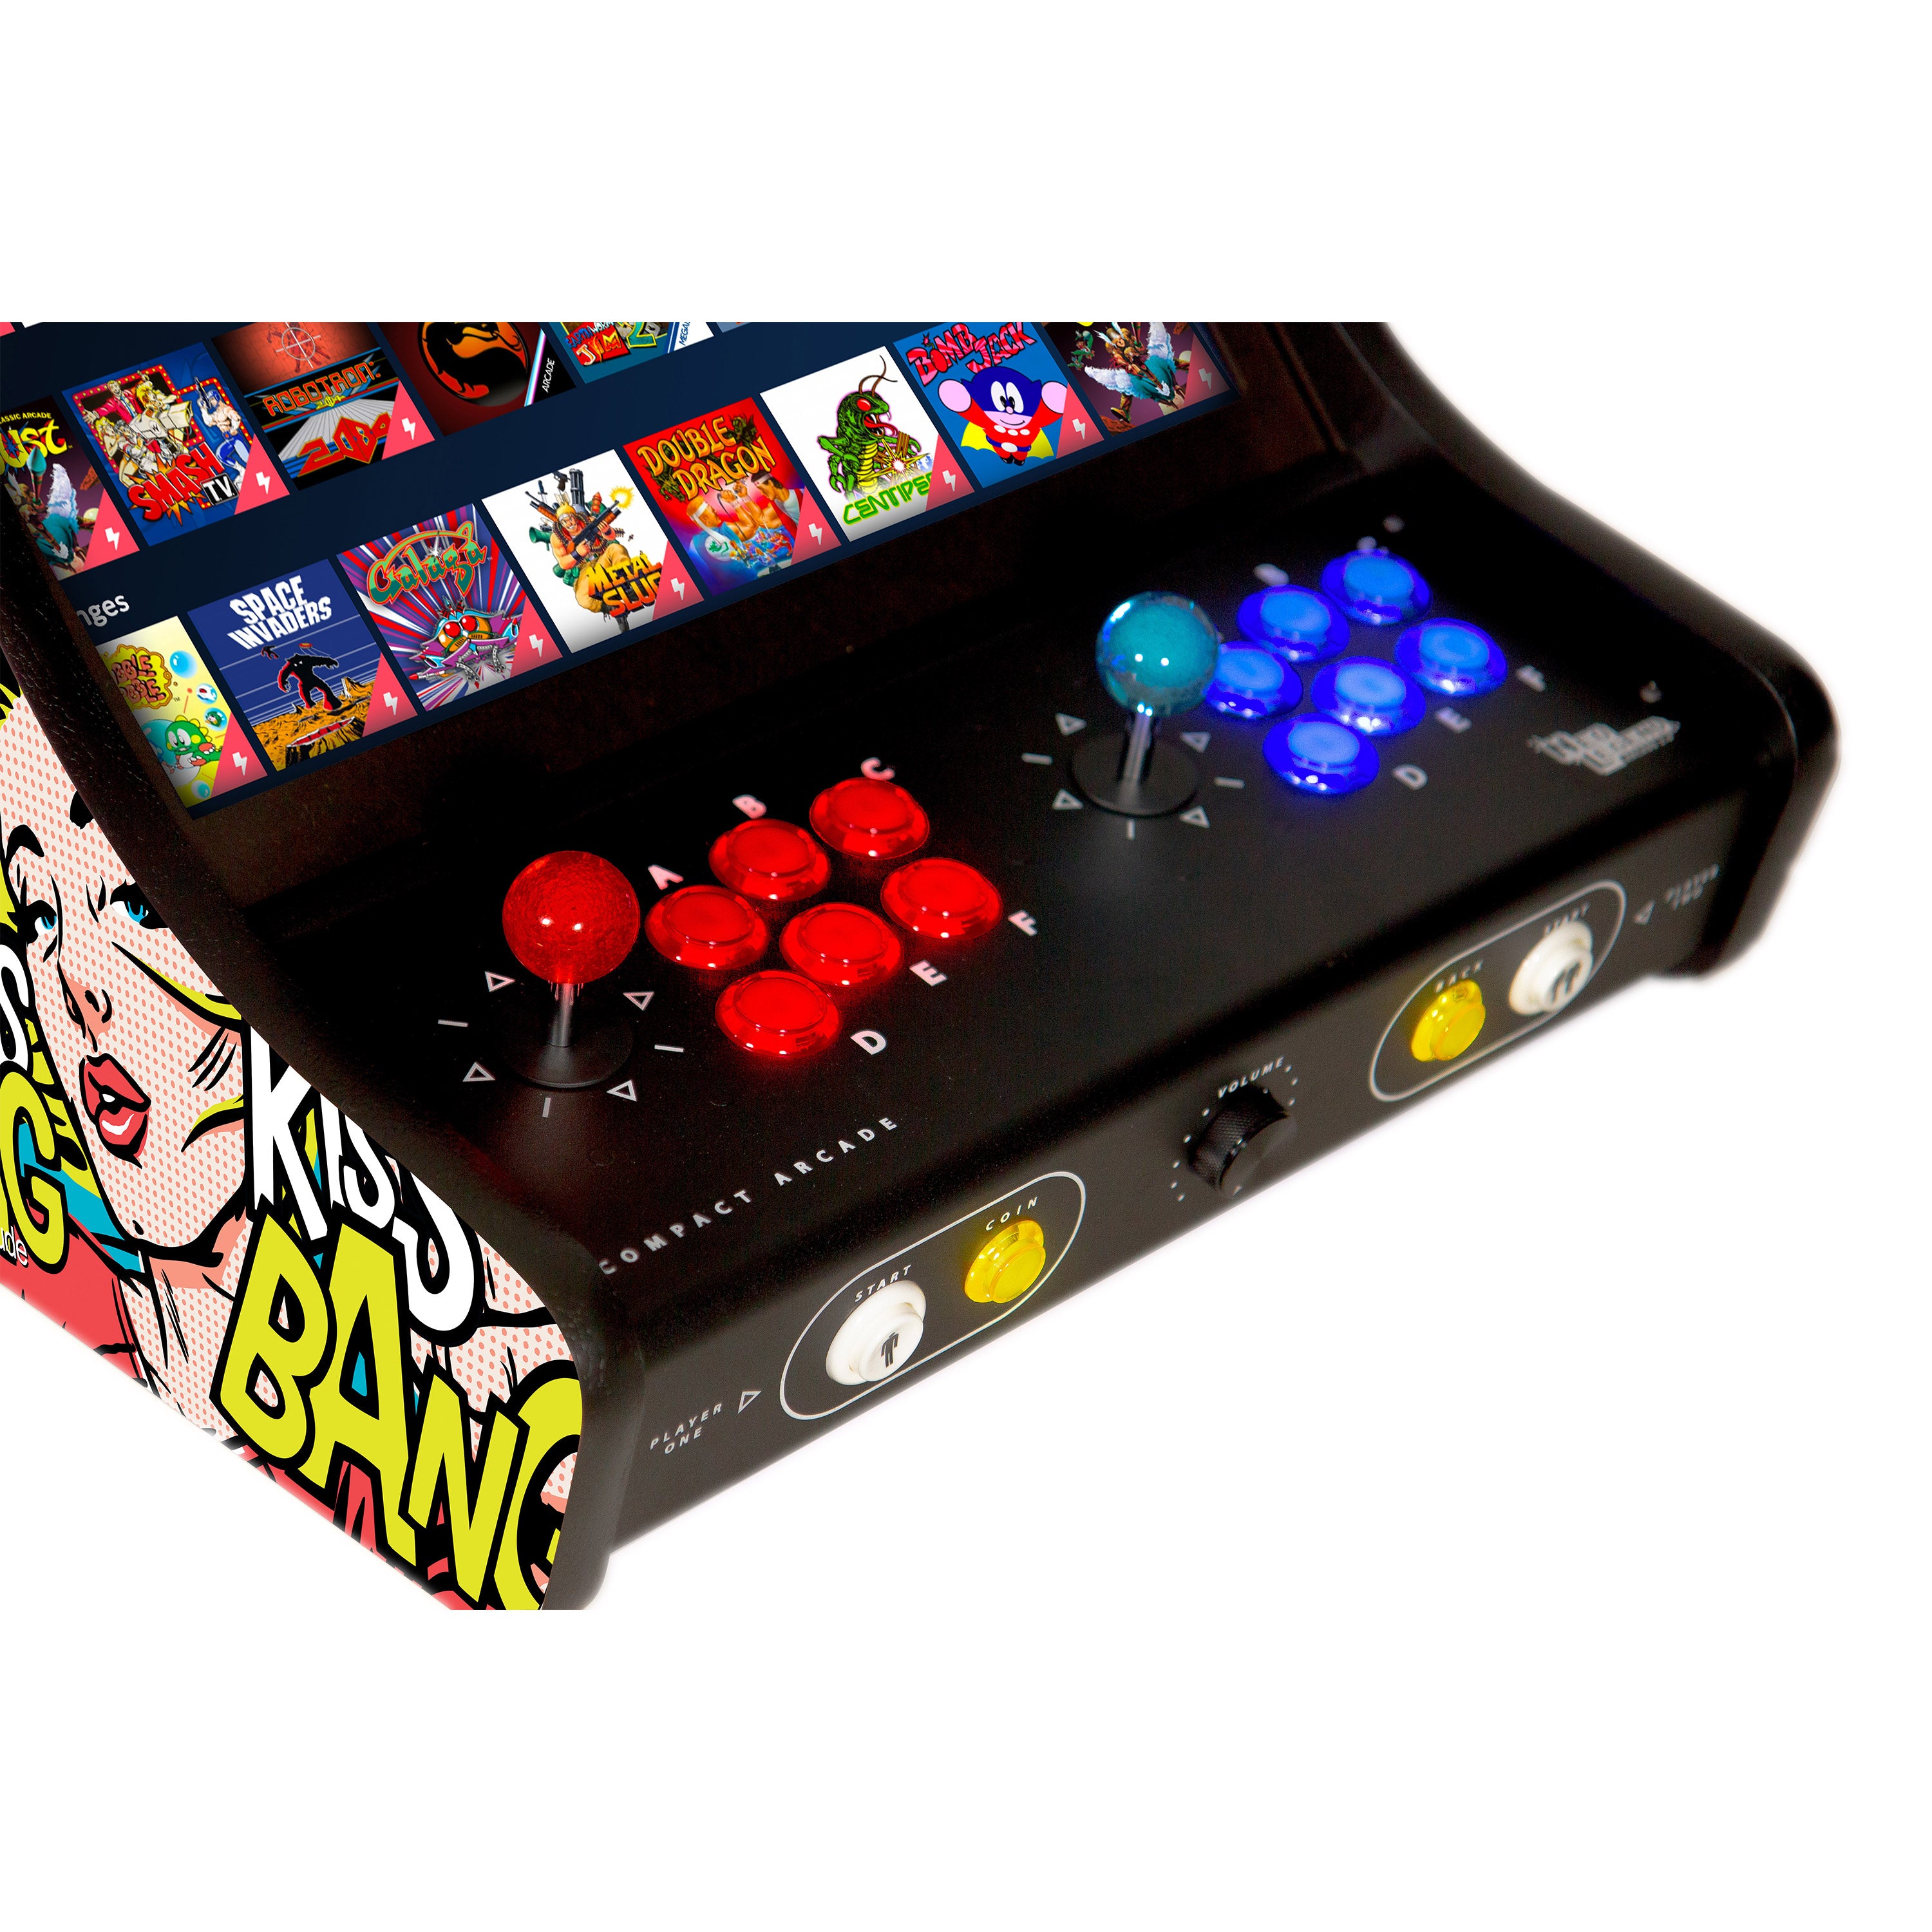 Neo Legend Compact Arcade - Kiss Kiss Bang Bang artwork by Butcher Billy